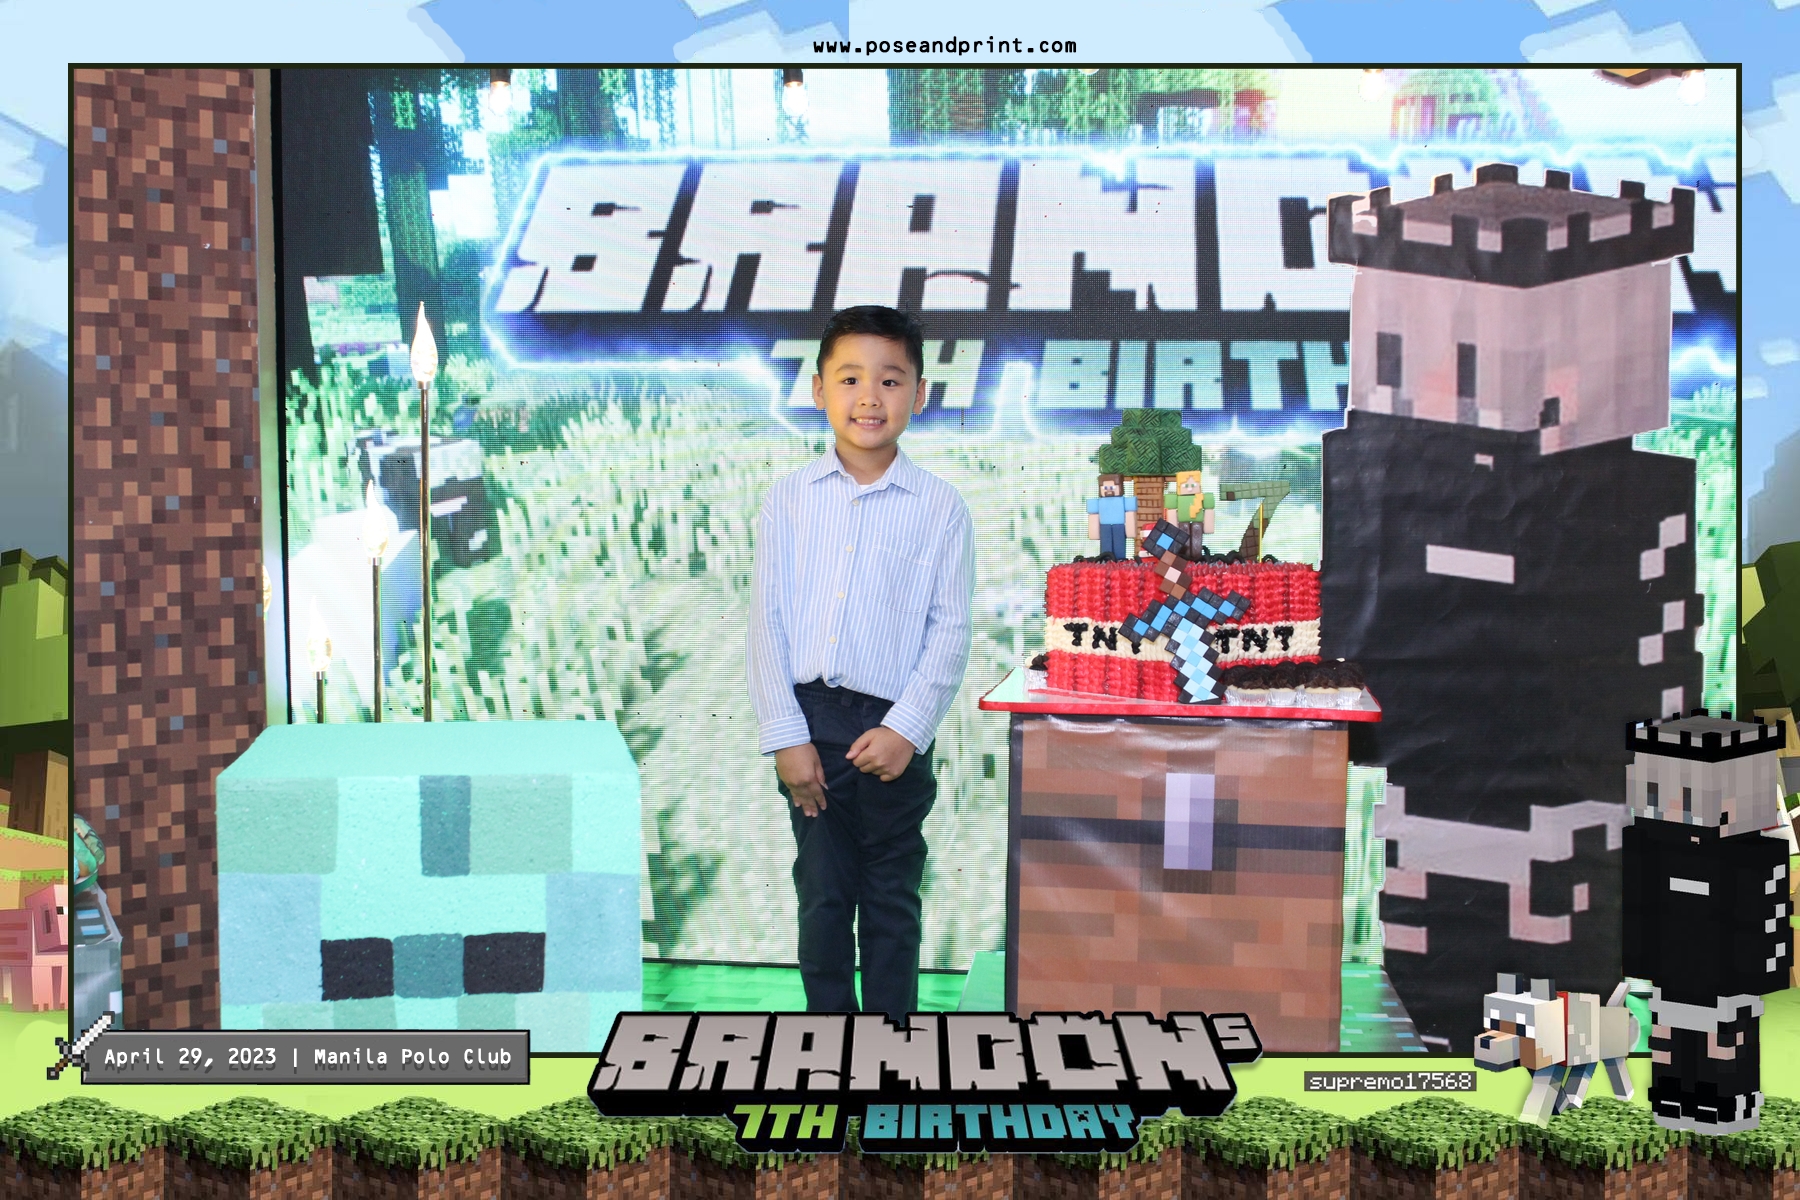 Brandon's 7th Birthday - Photoman